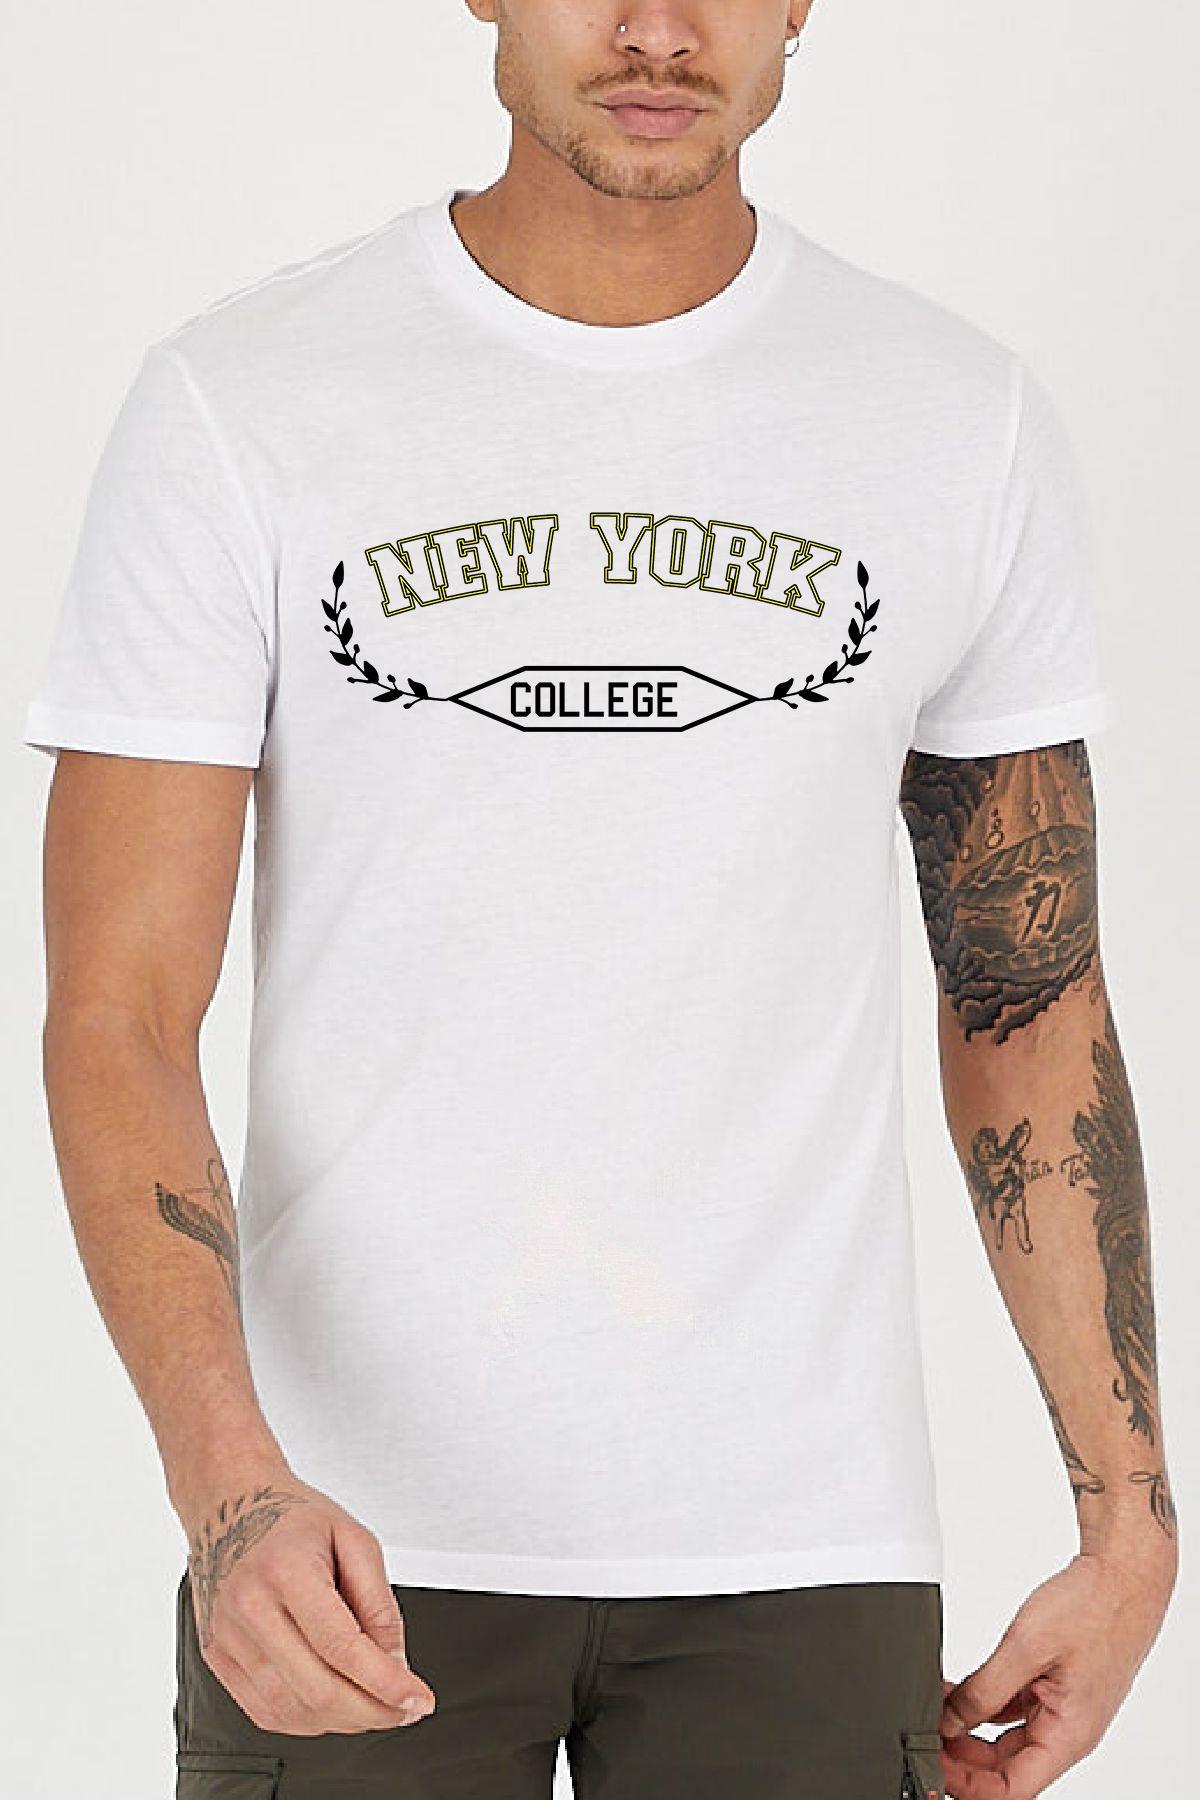 New York College Printed Crew Neck Men's T -shirt